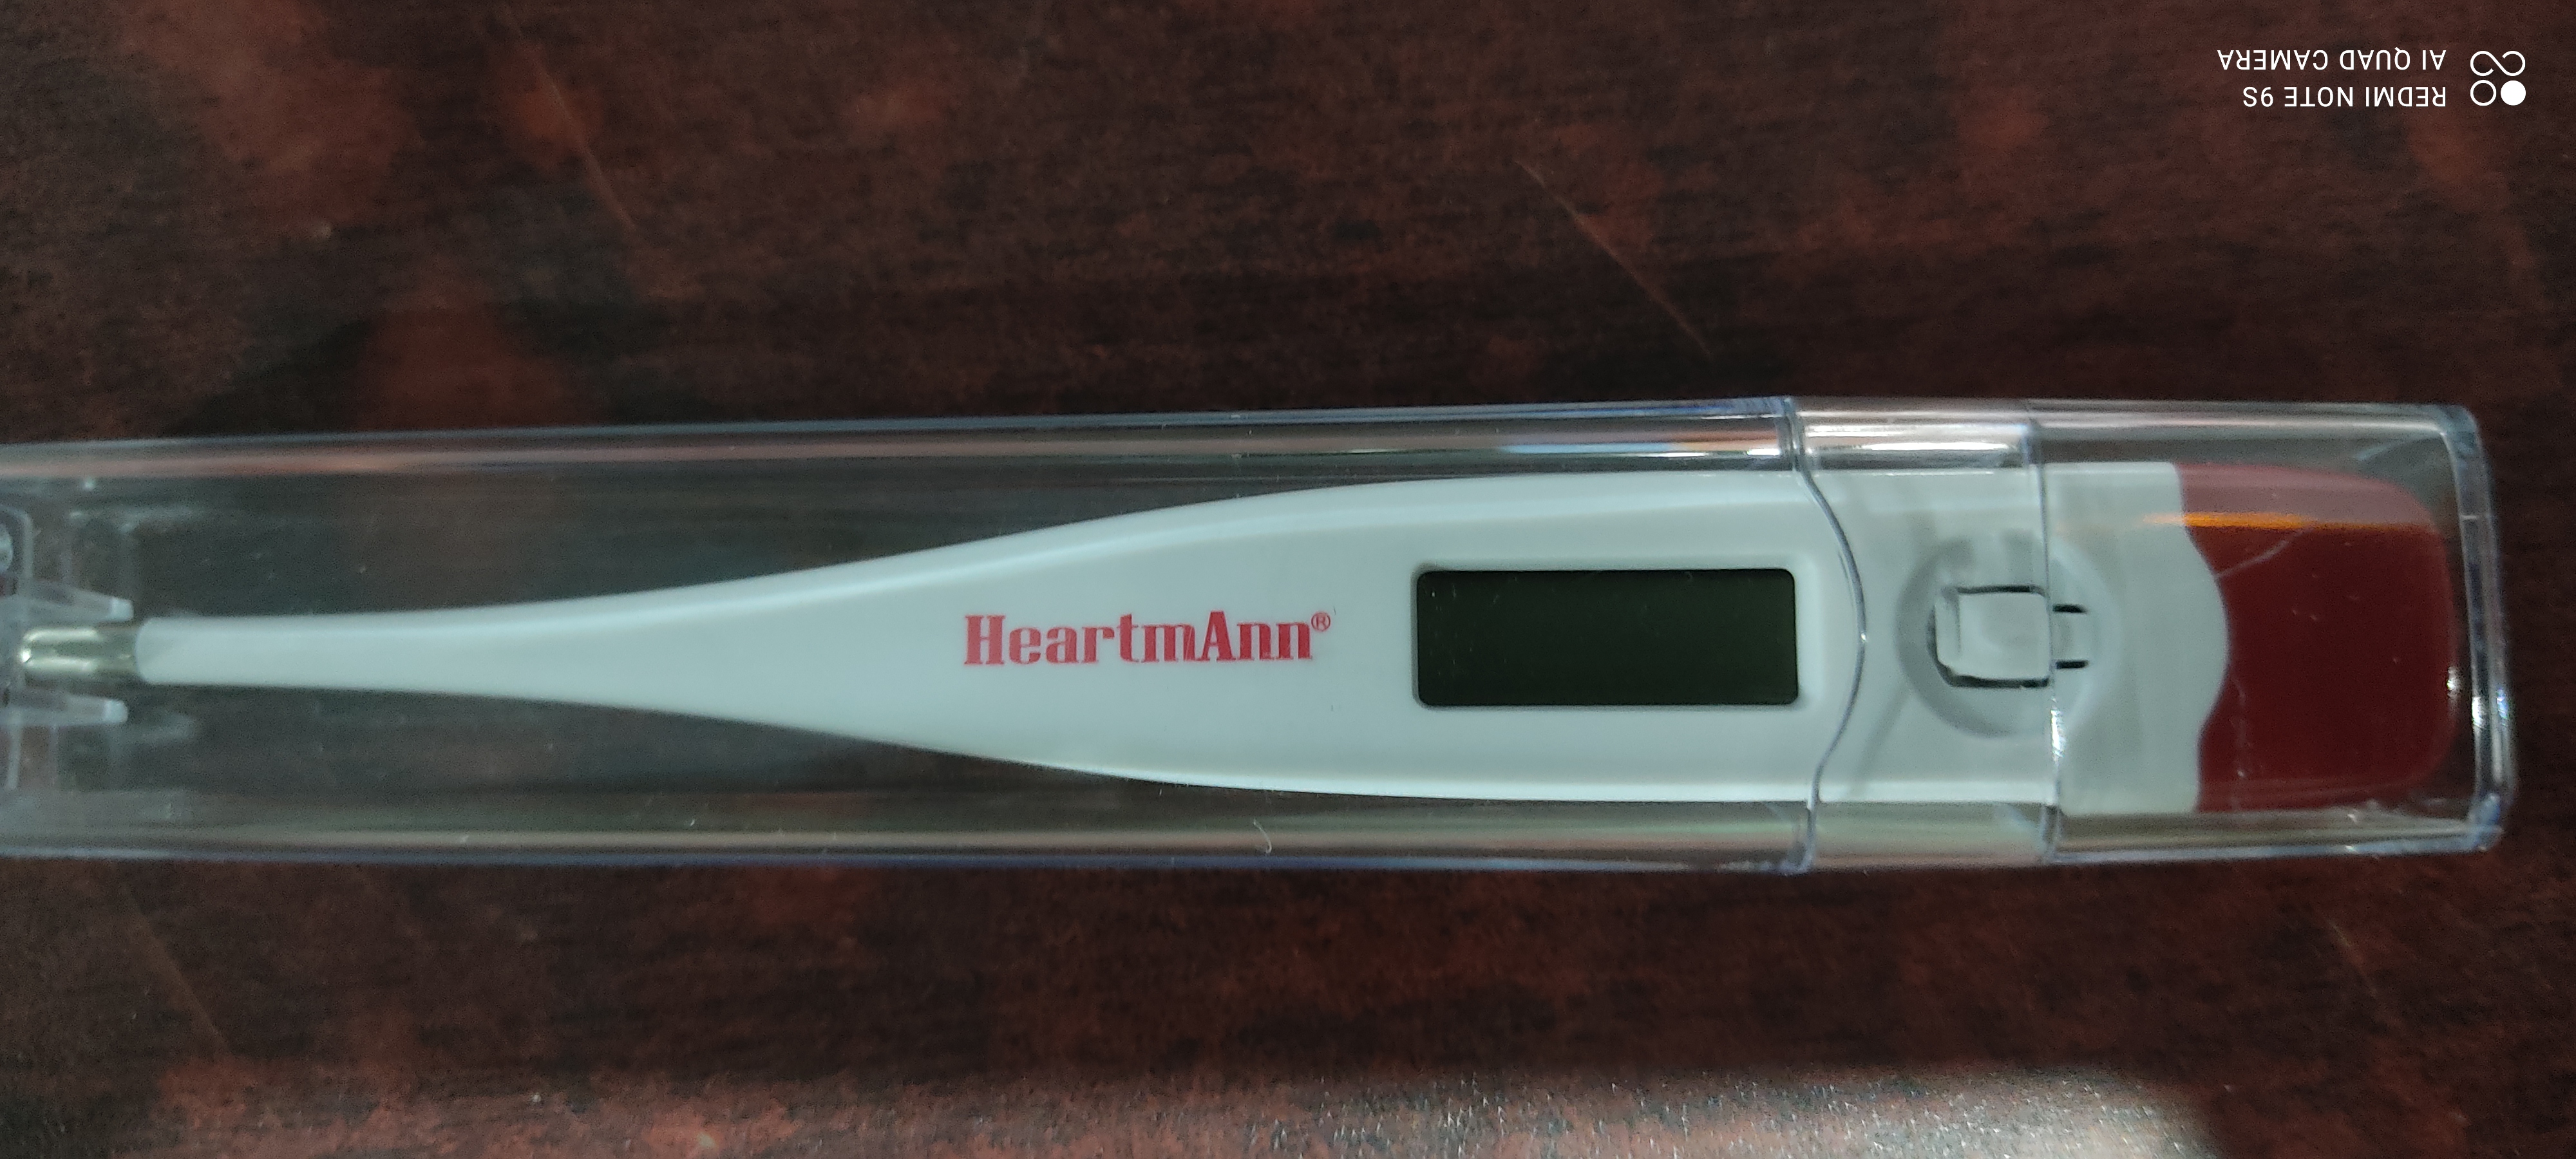 HeartmAnn thermometer